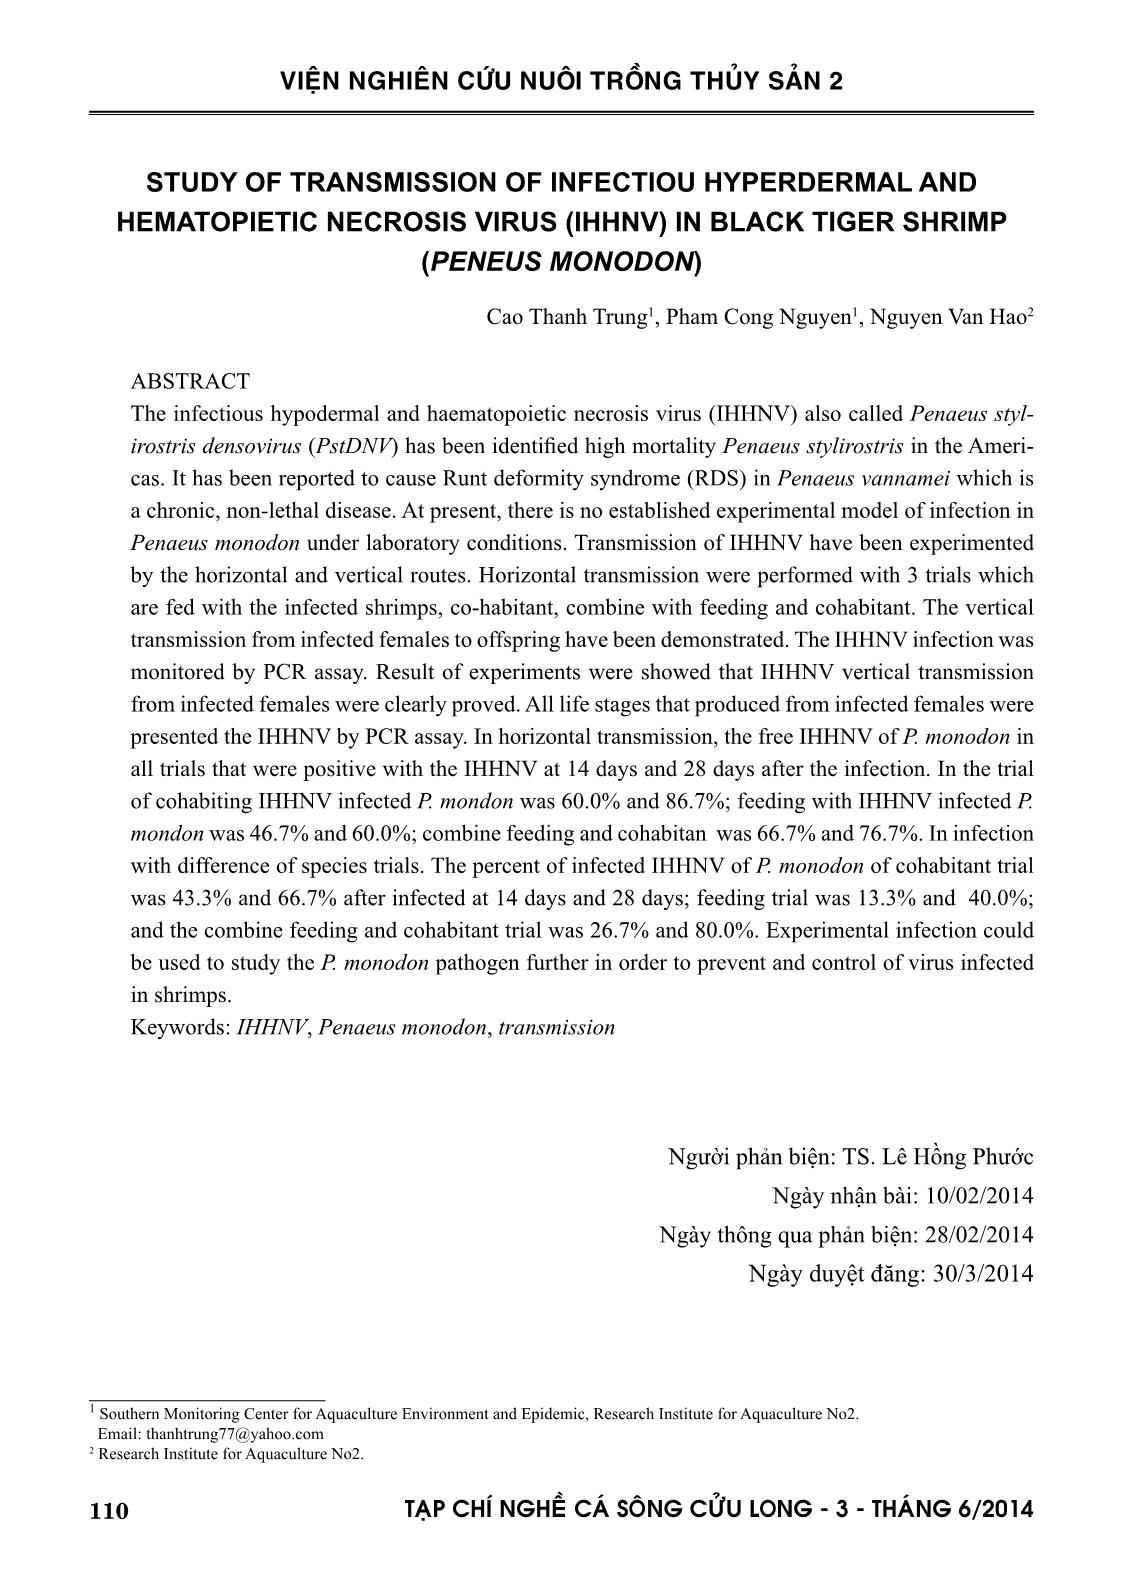 Study of transmission of infectiou hyperdermal and hematopietic necrosis virus (ihhnv) in black tiger shrimp (peneus monodon) trang 1